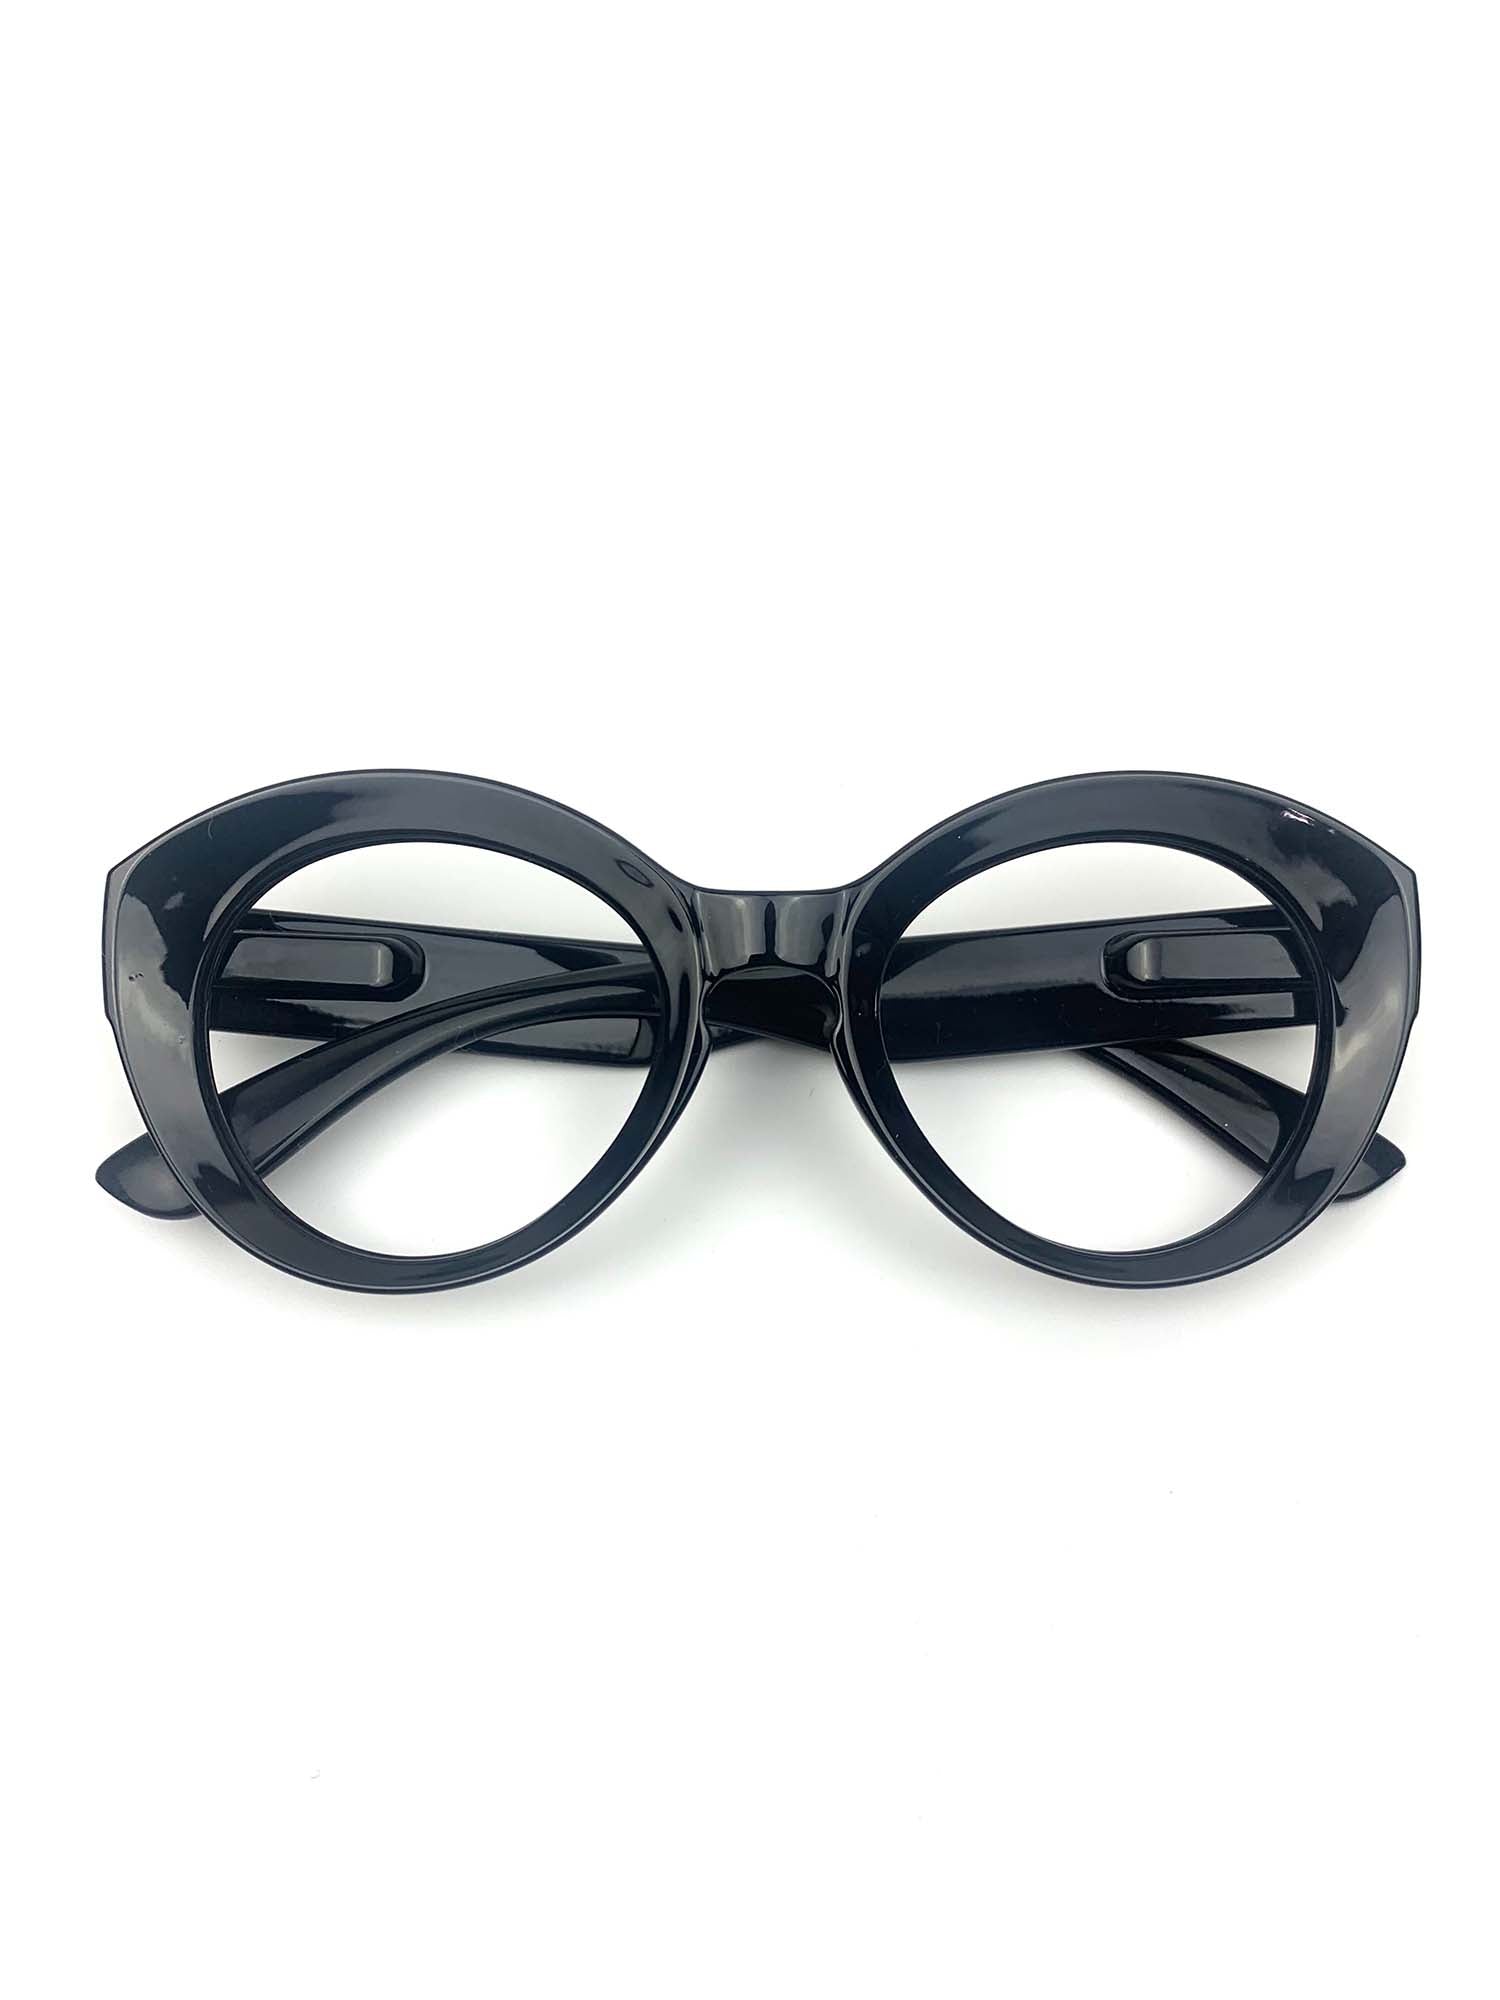 Ursula Reading Glasses - Black